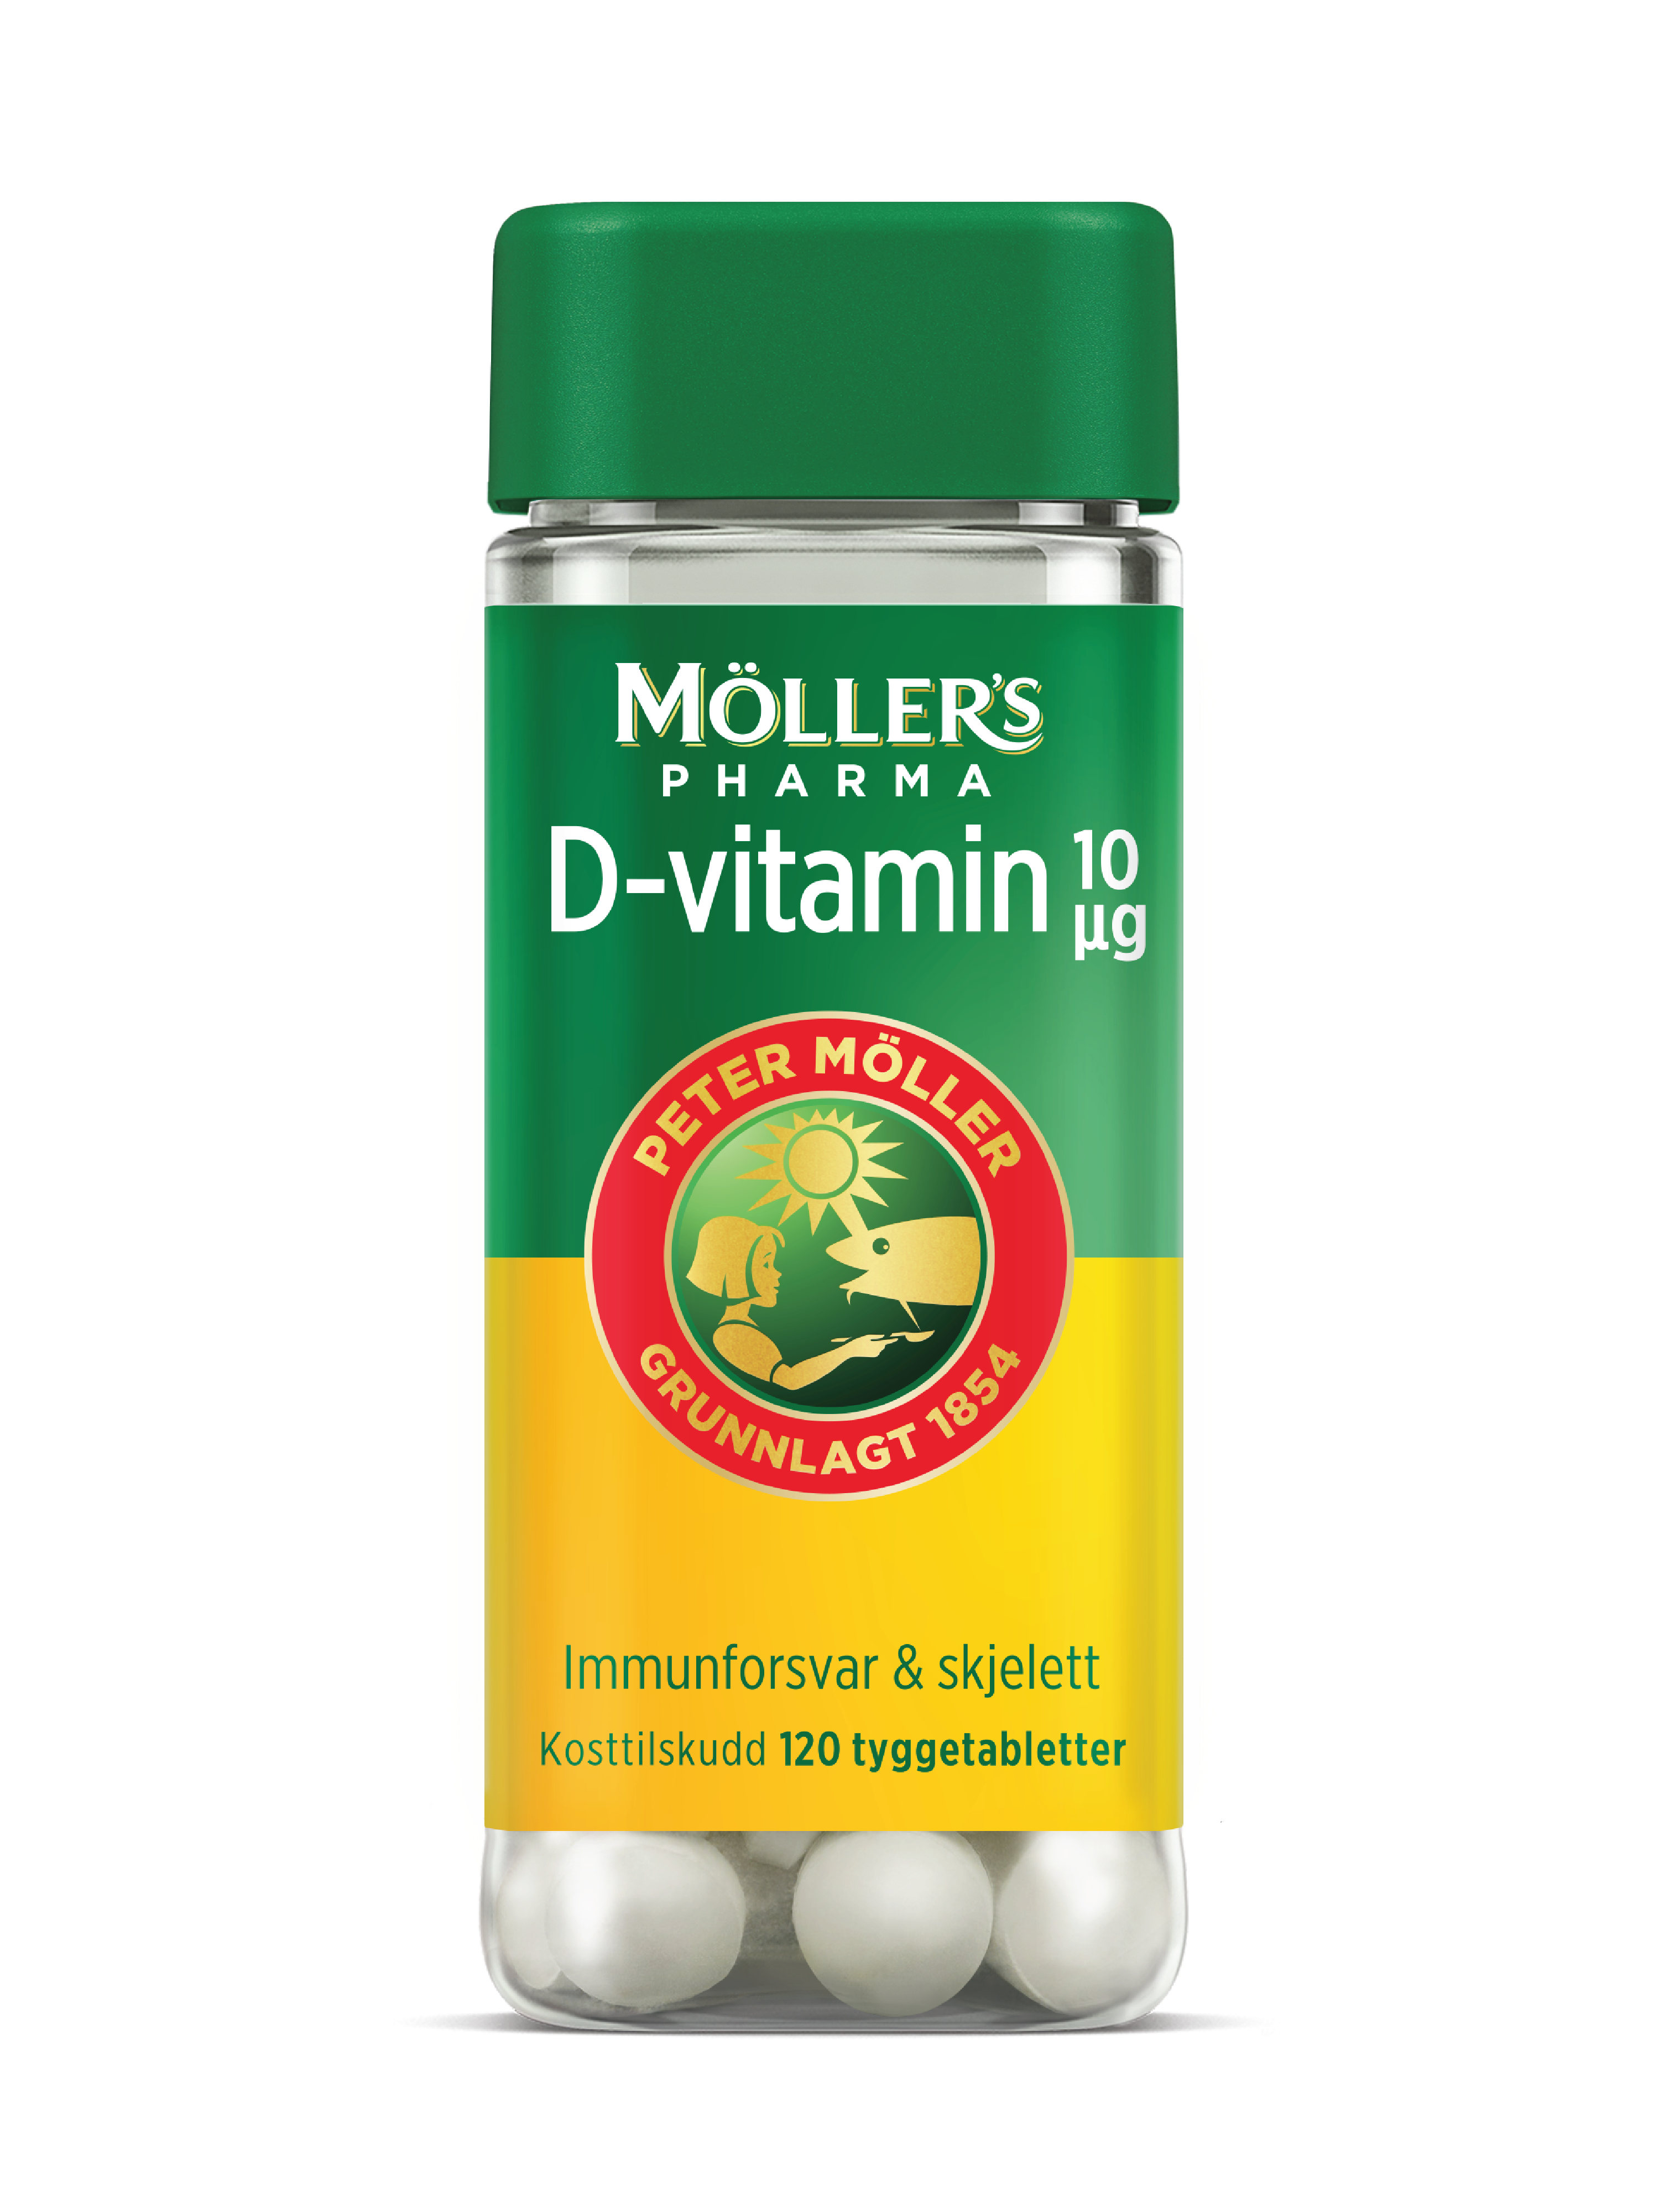 Möller's Pharma 10 µg D-vitamin tyggetabletter, 120 stk.